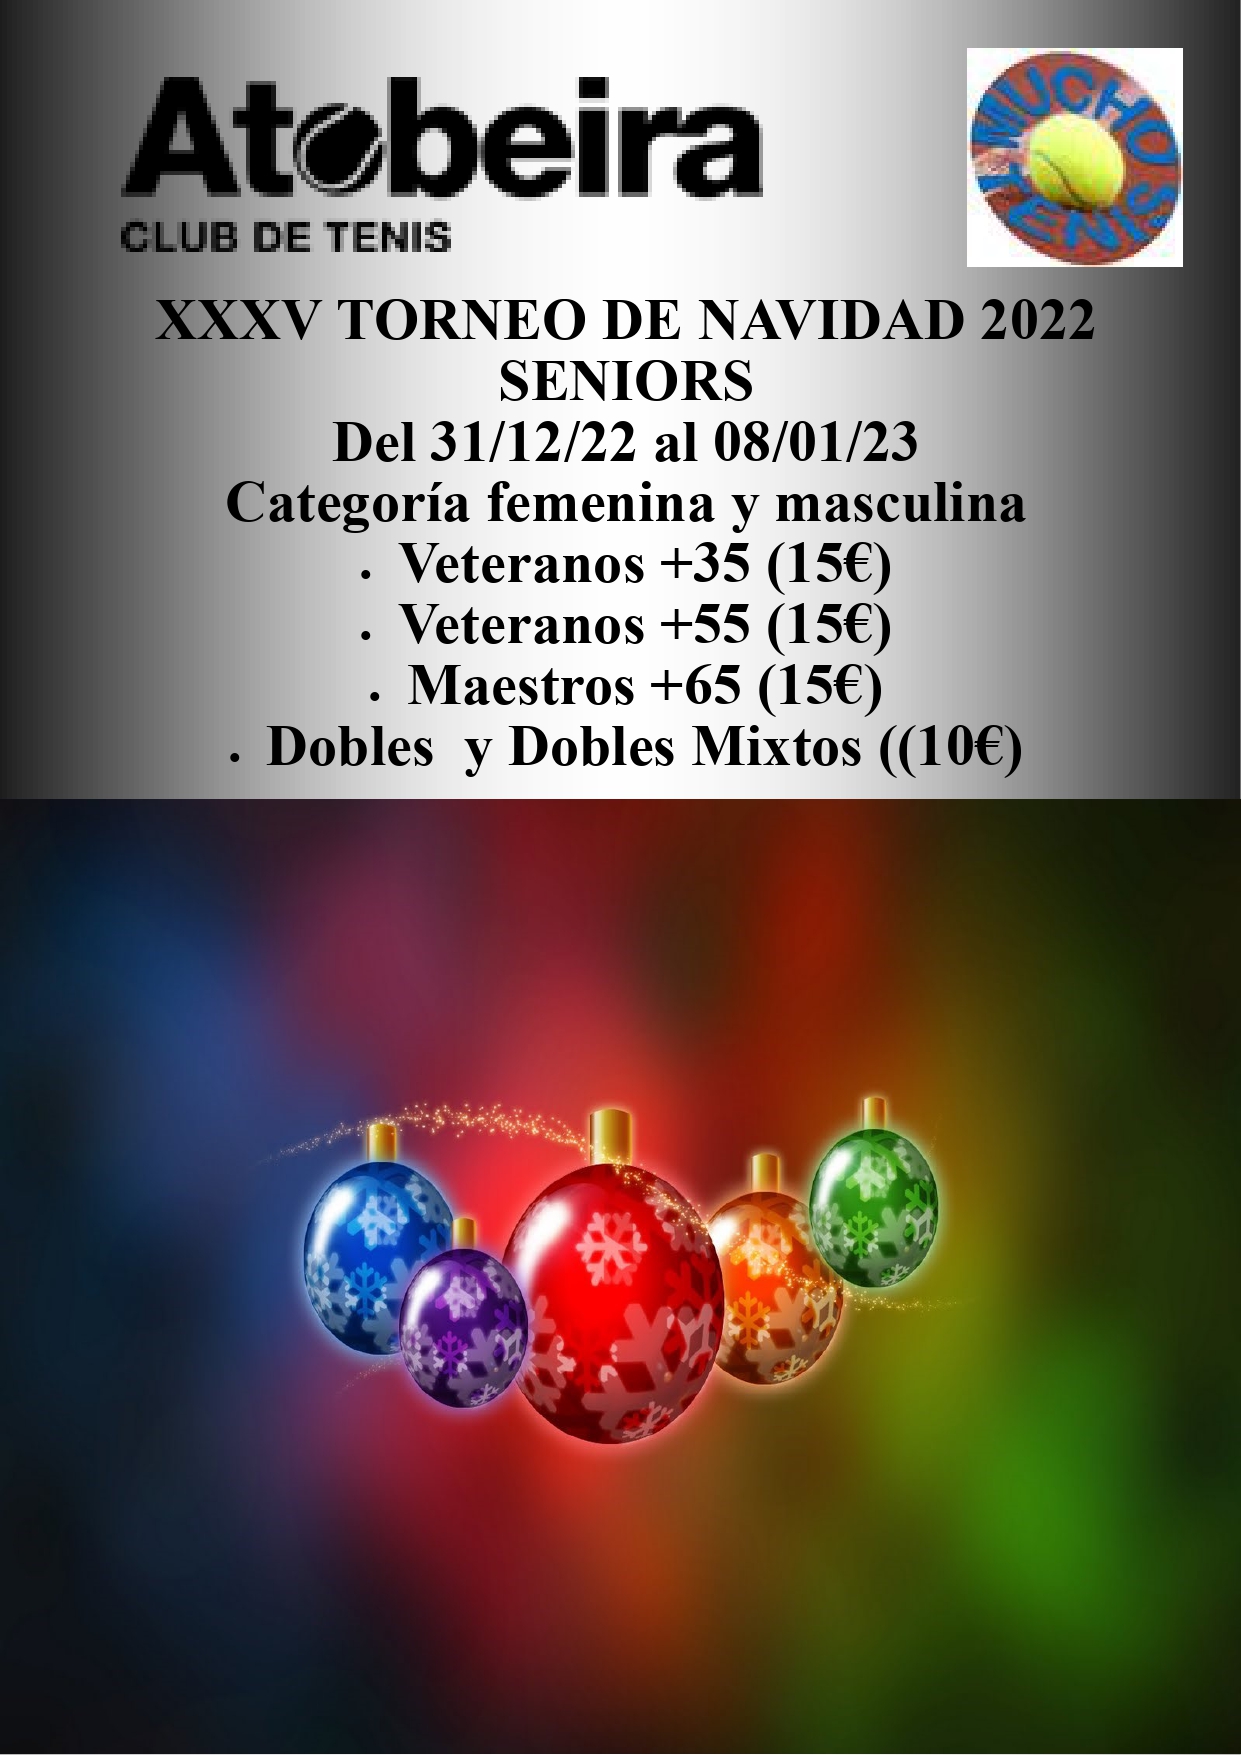 XXXV Torneo de Navidad Senior A Tobeira 2022